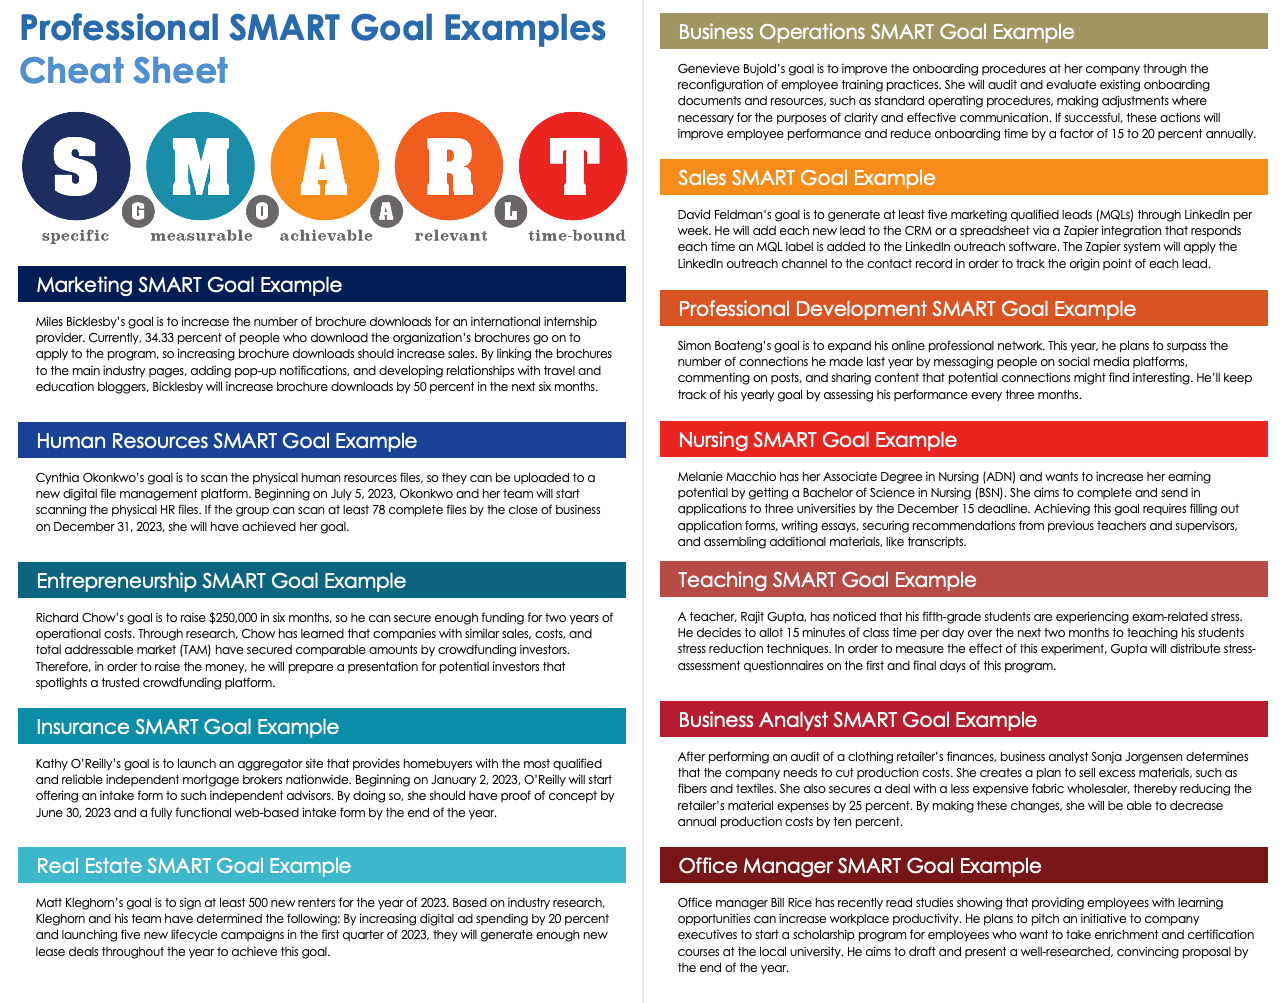 SMART Goal Examples Cheat Sheet